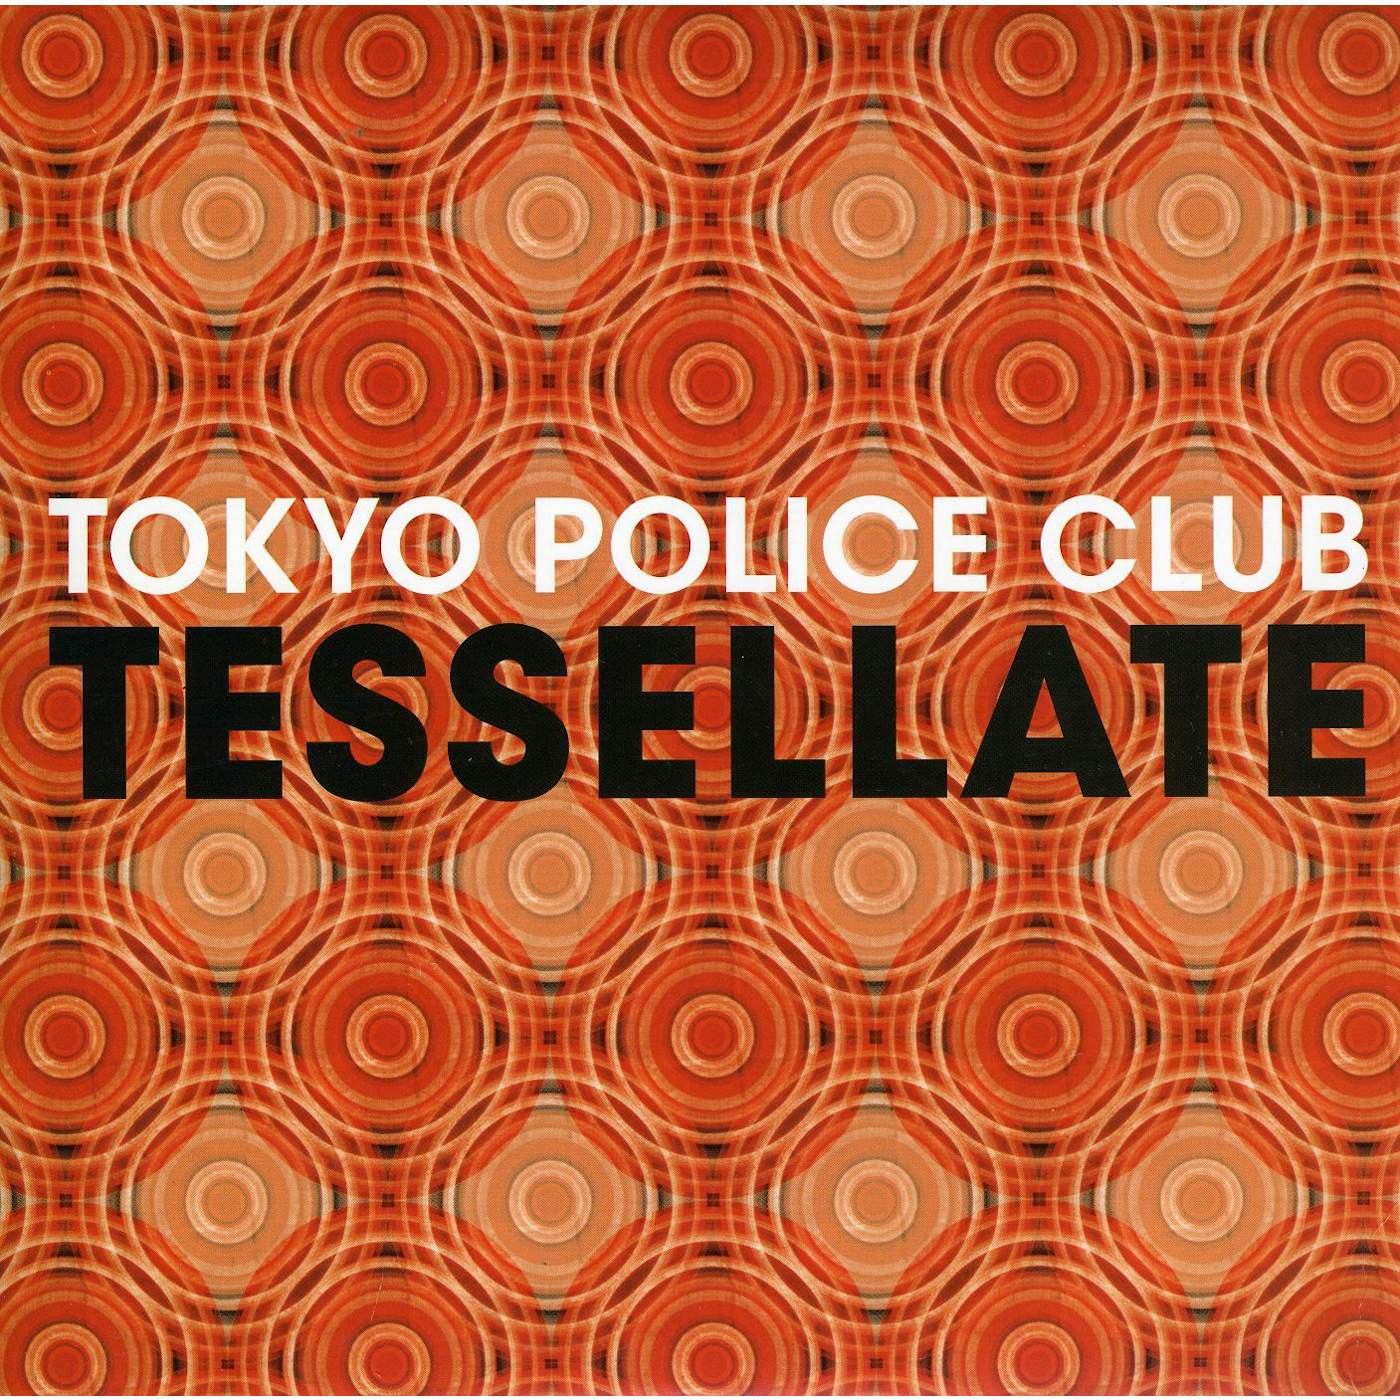 Tokyo Police Club TESSELLATE (X2) Vinyl Record